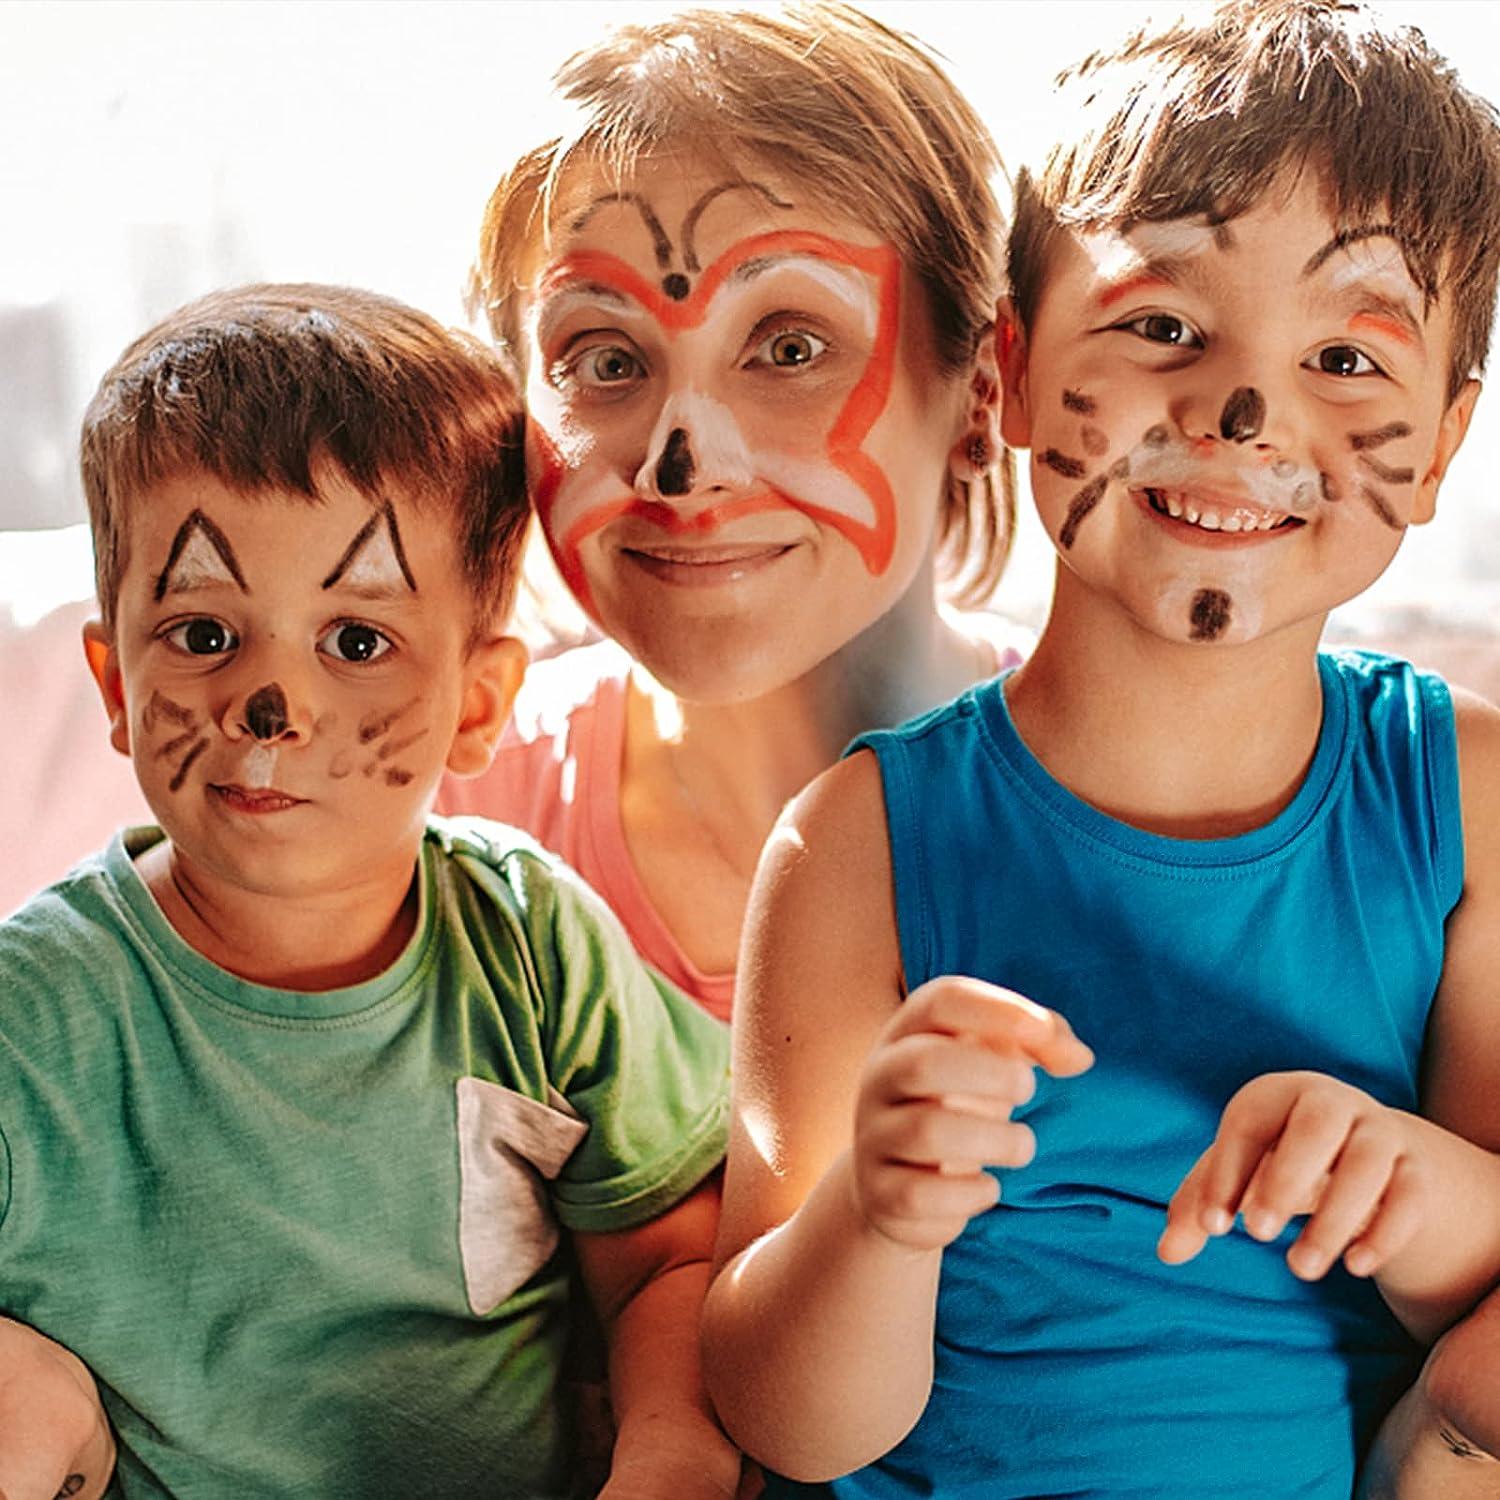 Kids Face Paint - What's Safe?